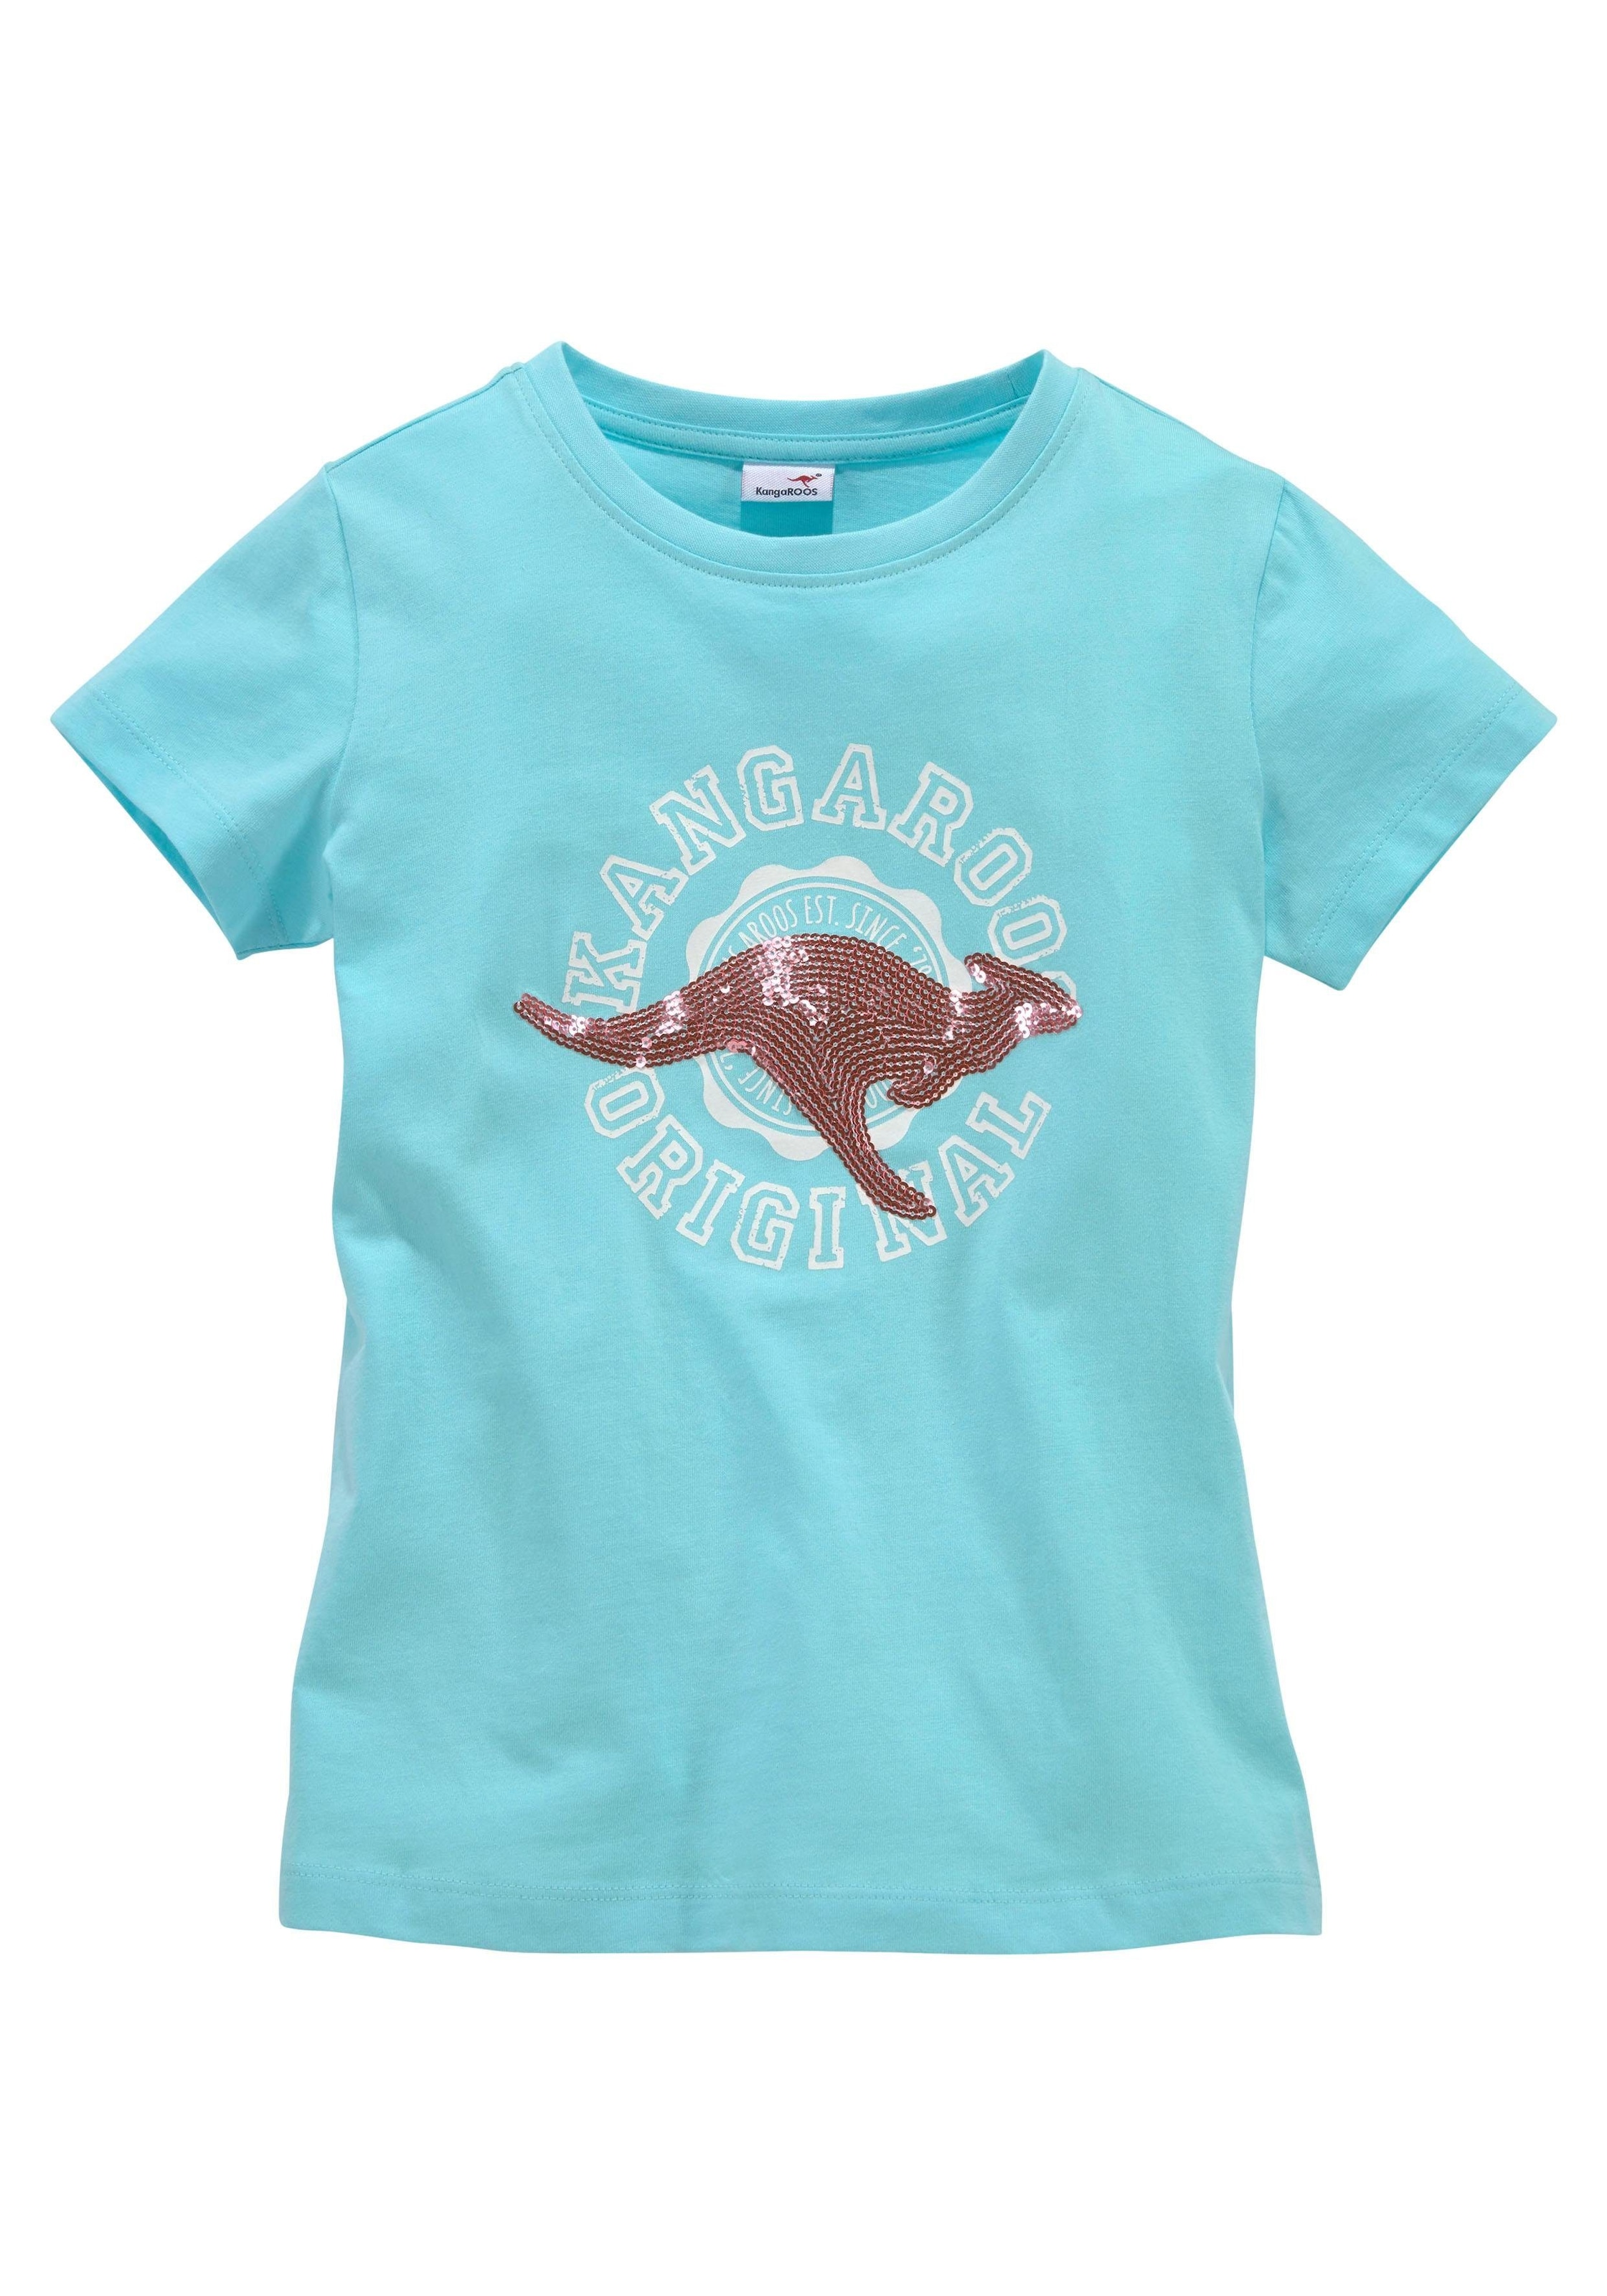 Trendige KangaROOS T-Shirt, Paillettenapplikation ohne Mindestbestellwert shoppen mit